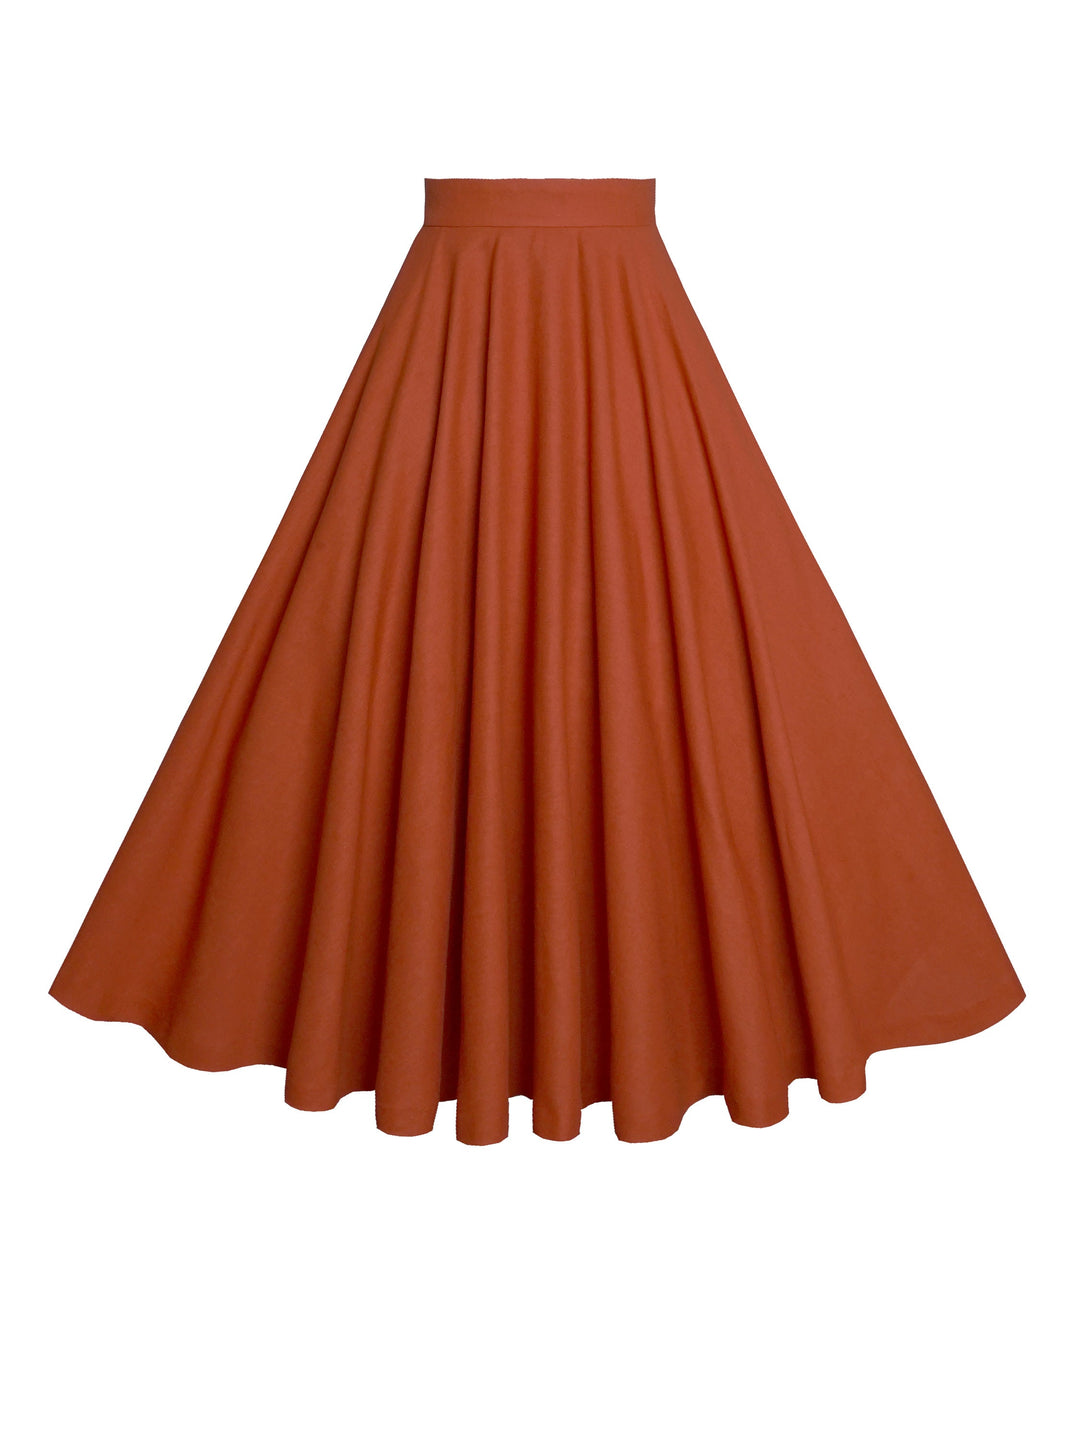 MTO - Lindy Skirt in Redwood Linen